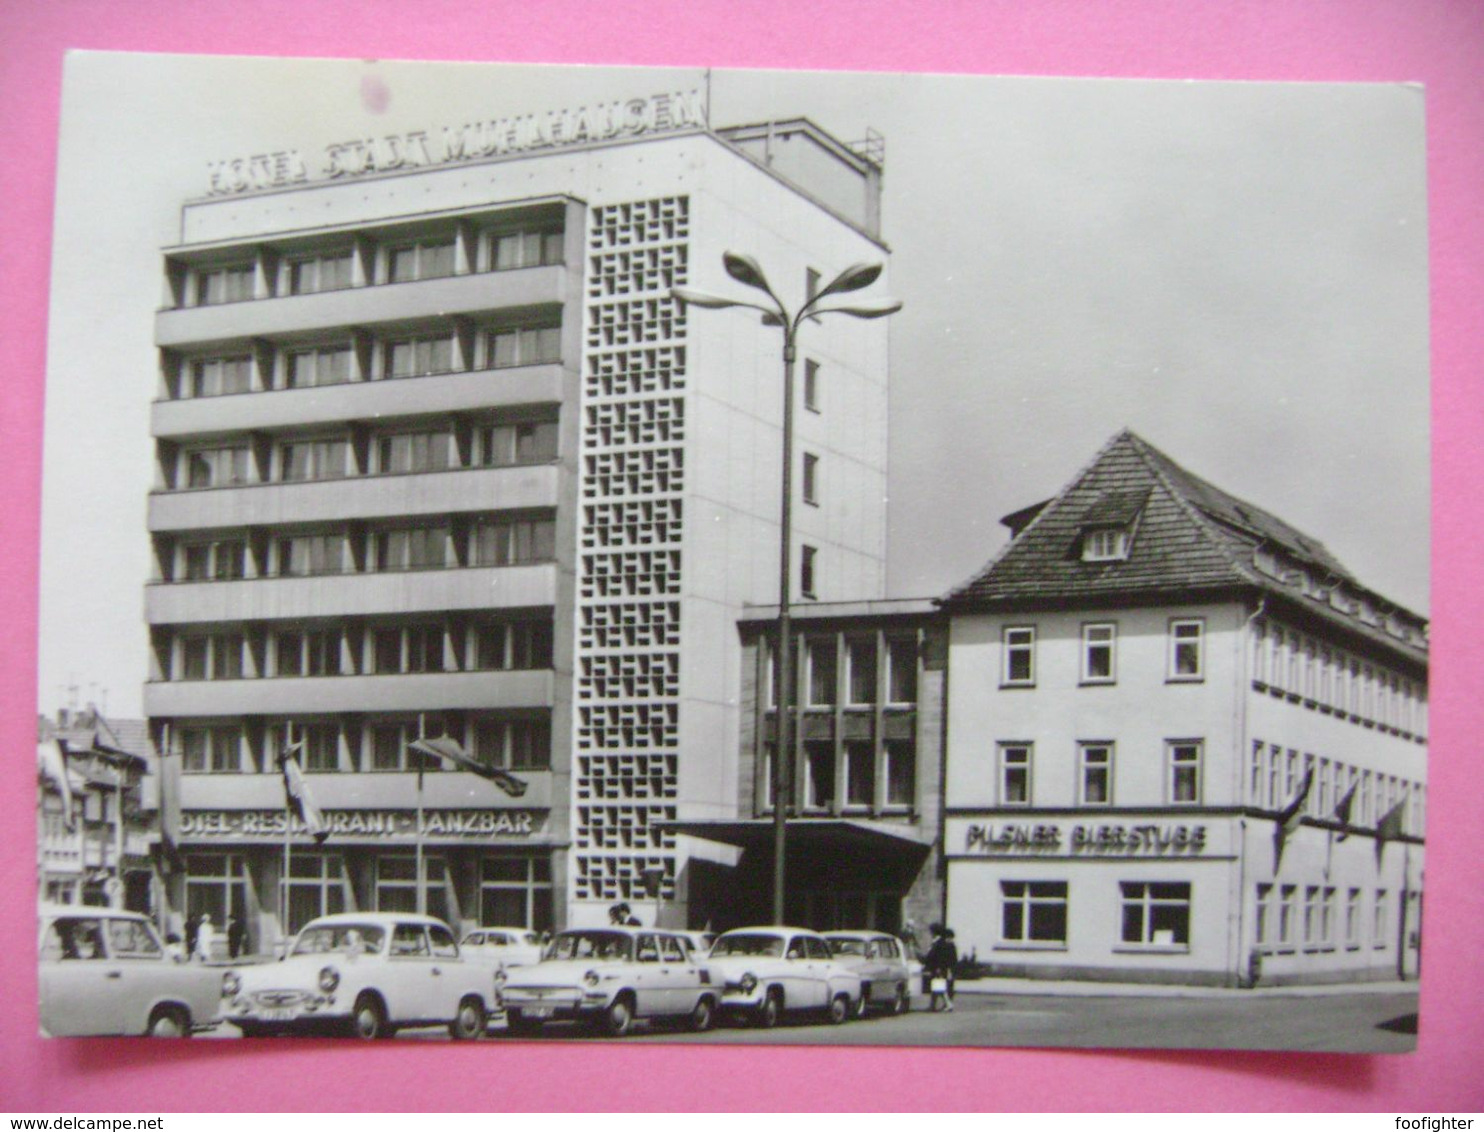 Germany: Mühlhausen - Hotel Stadt Mühlhausen, Alte Auto Trabant, Skoda, Usw. - 1970s Unused - Muehlhausen